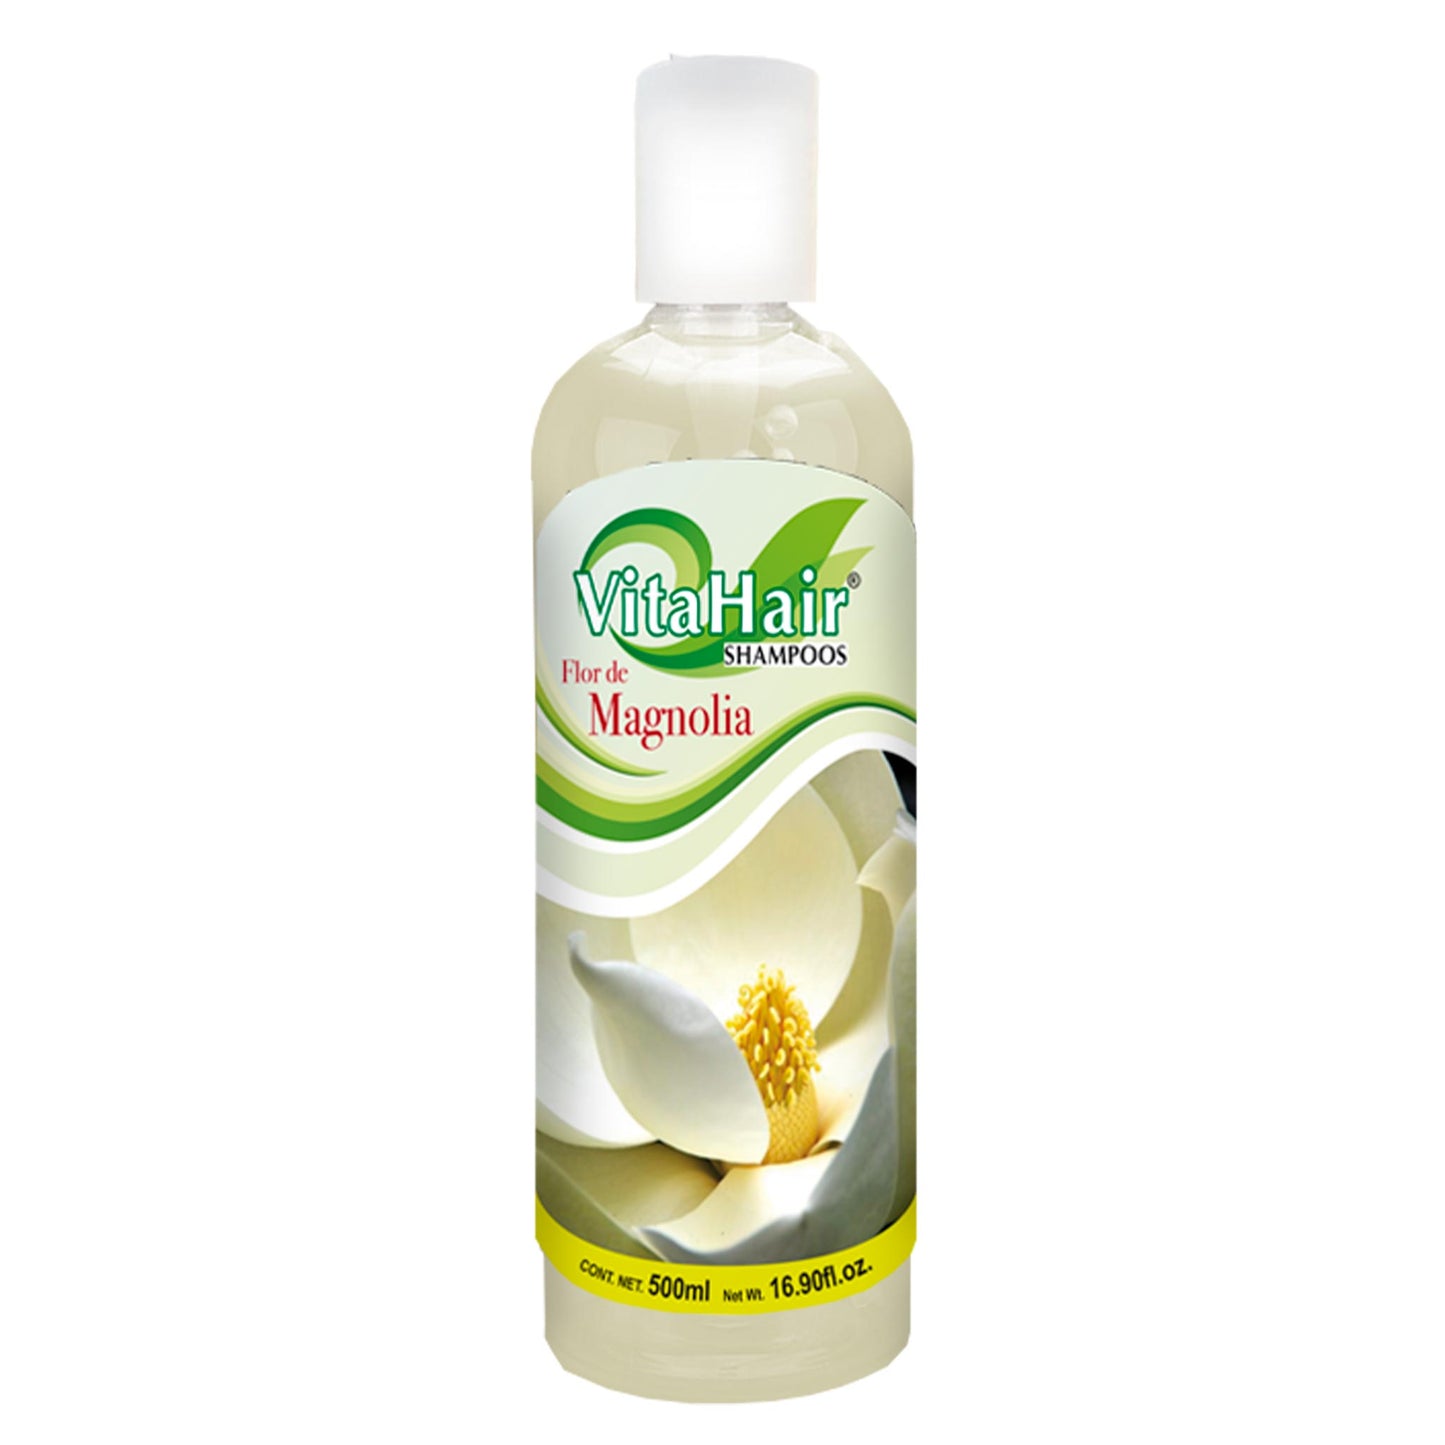 VITAHAIR ® shampoo de magnolia 500ml